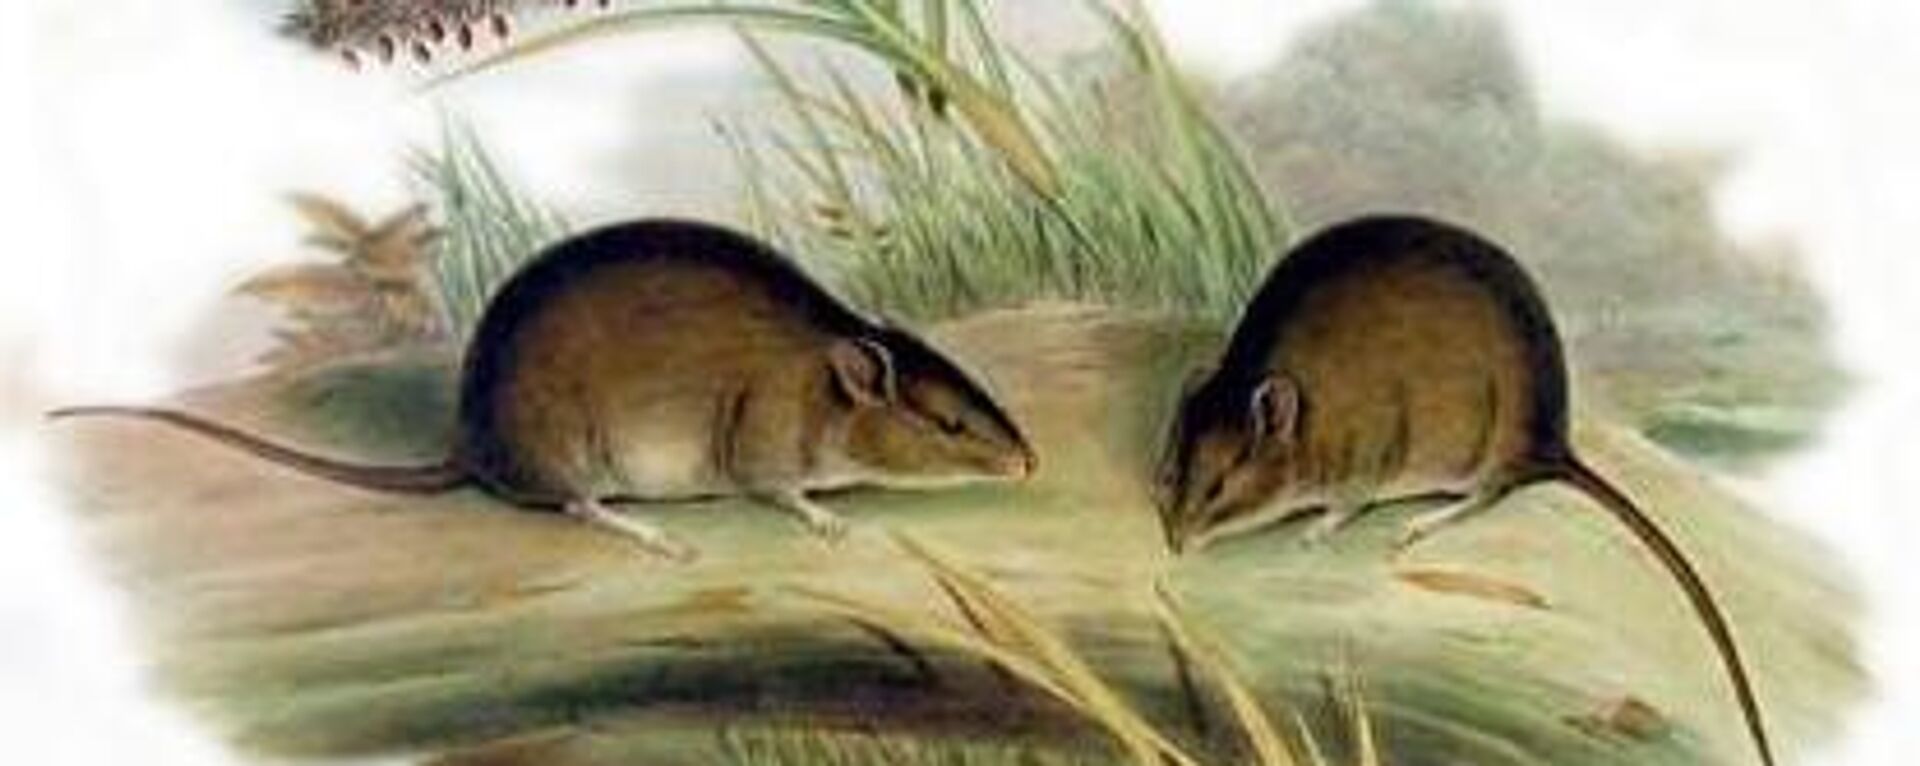 El ratón de Gould (Pseudomys gouldii) - Sputnik Mundo, 1920, 30.06.2021